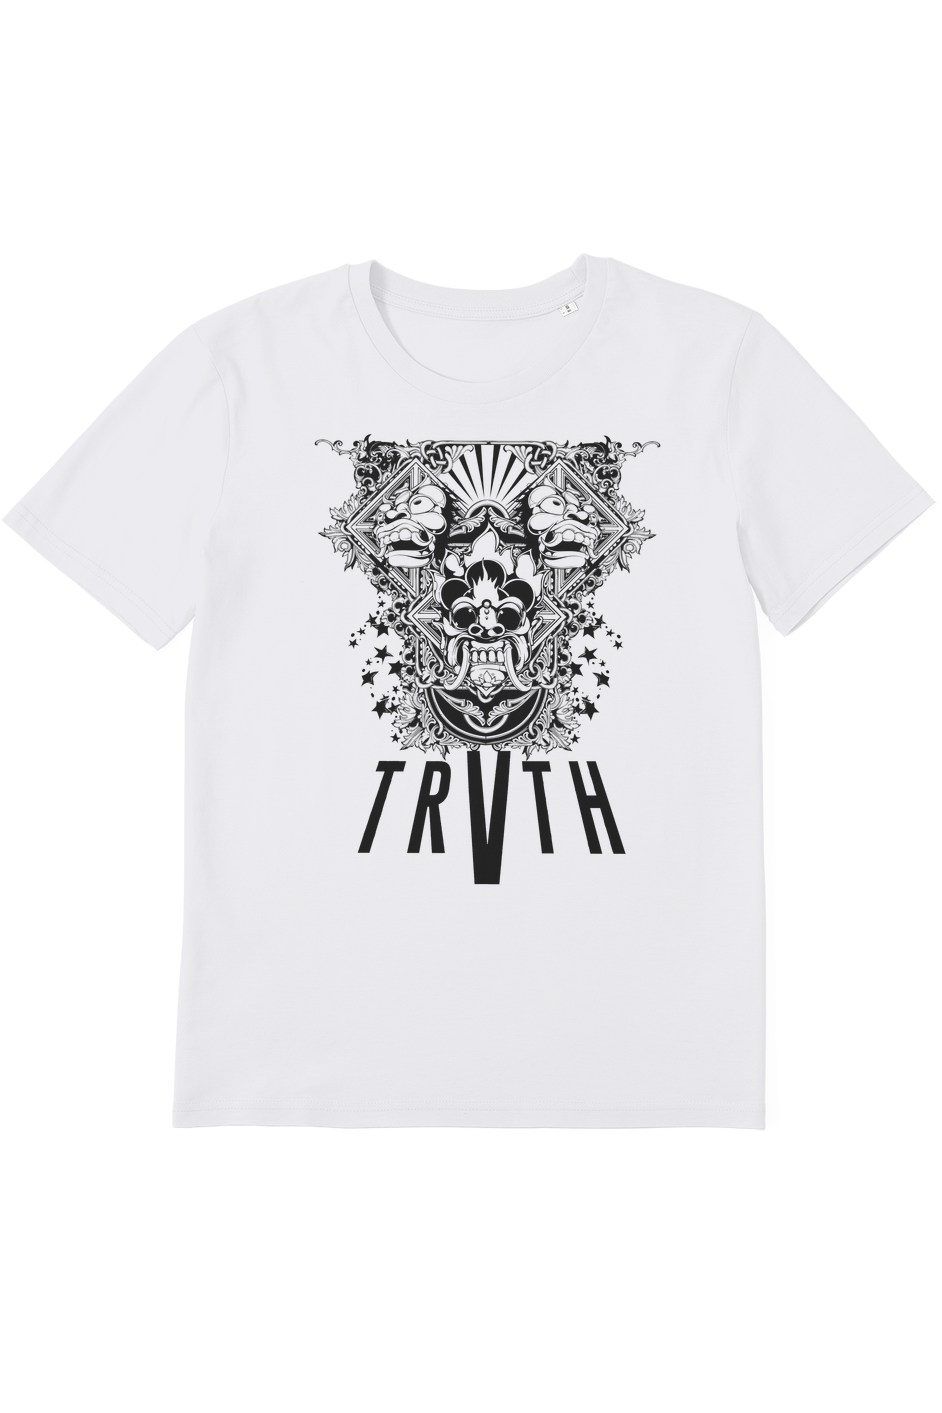 Snakes n Jakes Organic T-Shirt vegan, sustainable, organic streetwear, - TRVTH ORGANIC CLOTHING